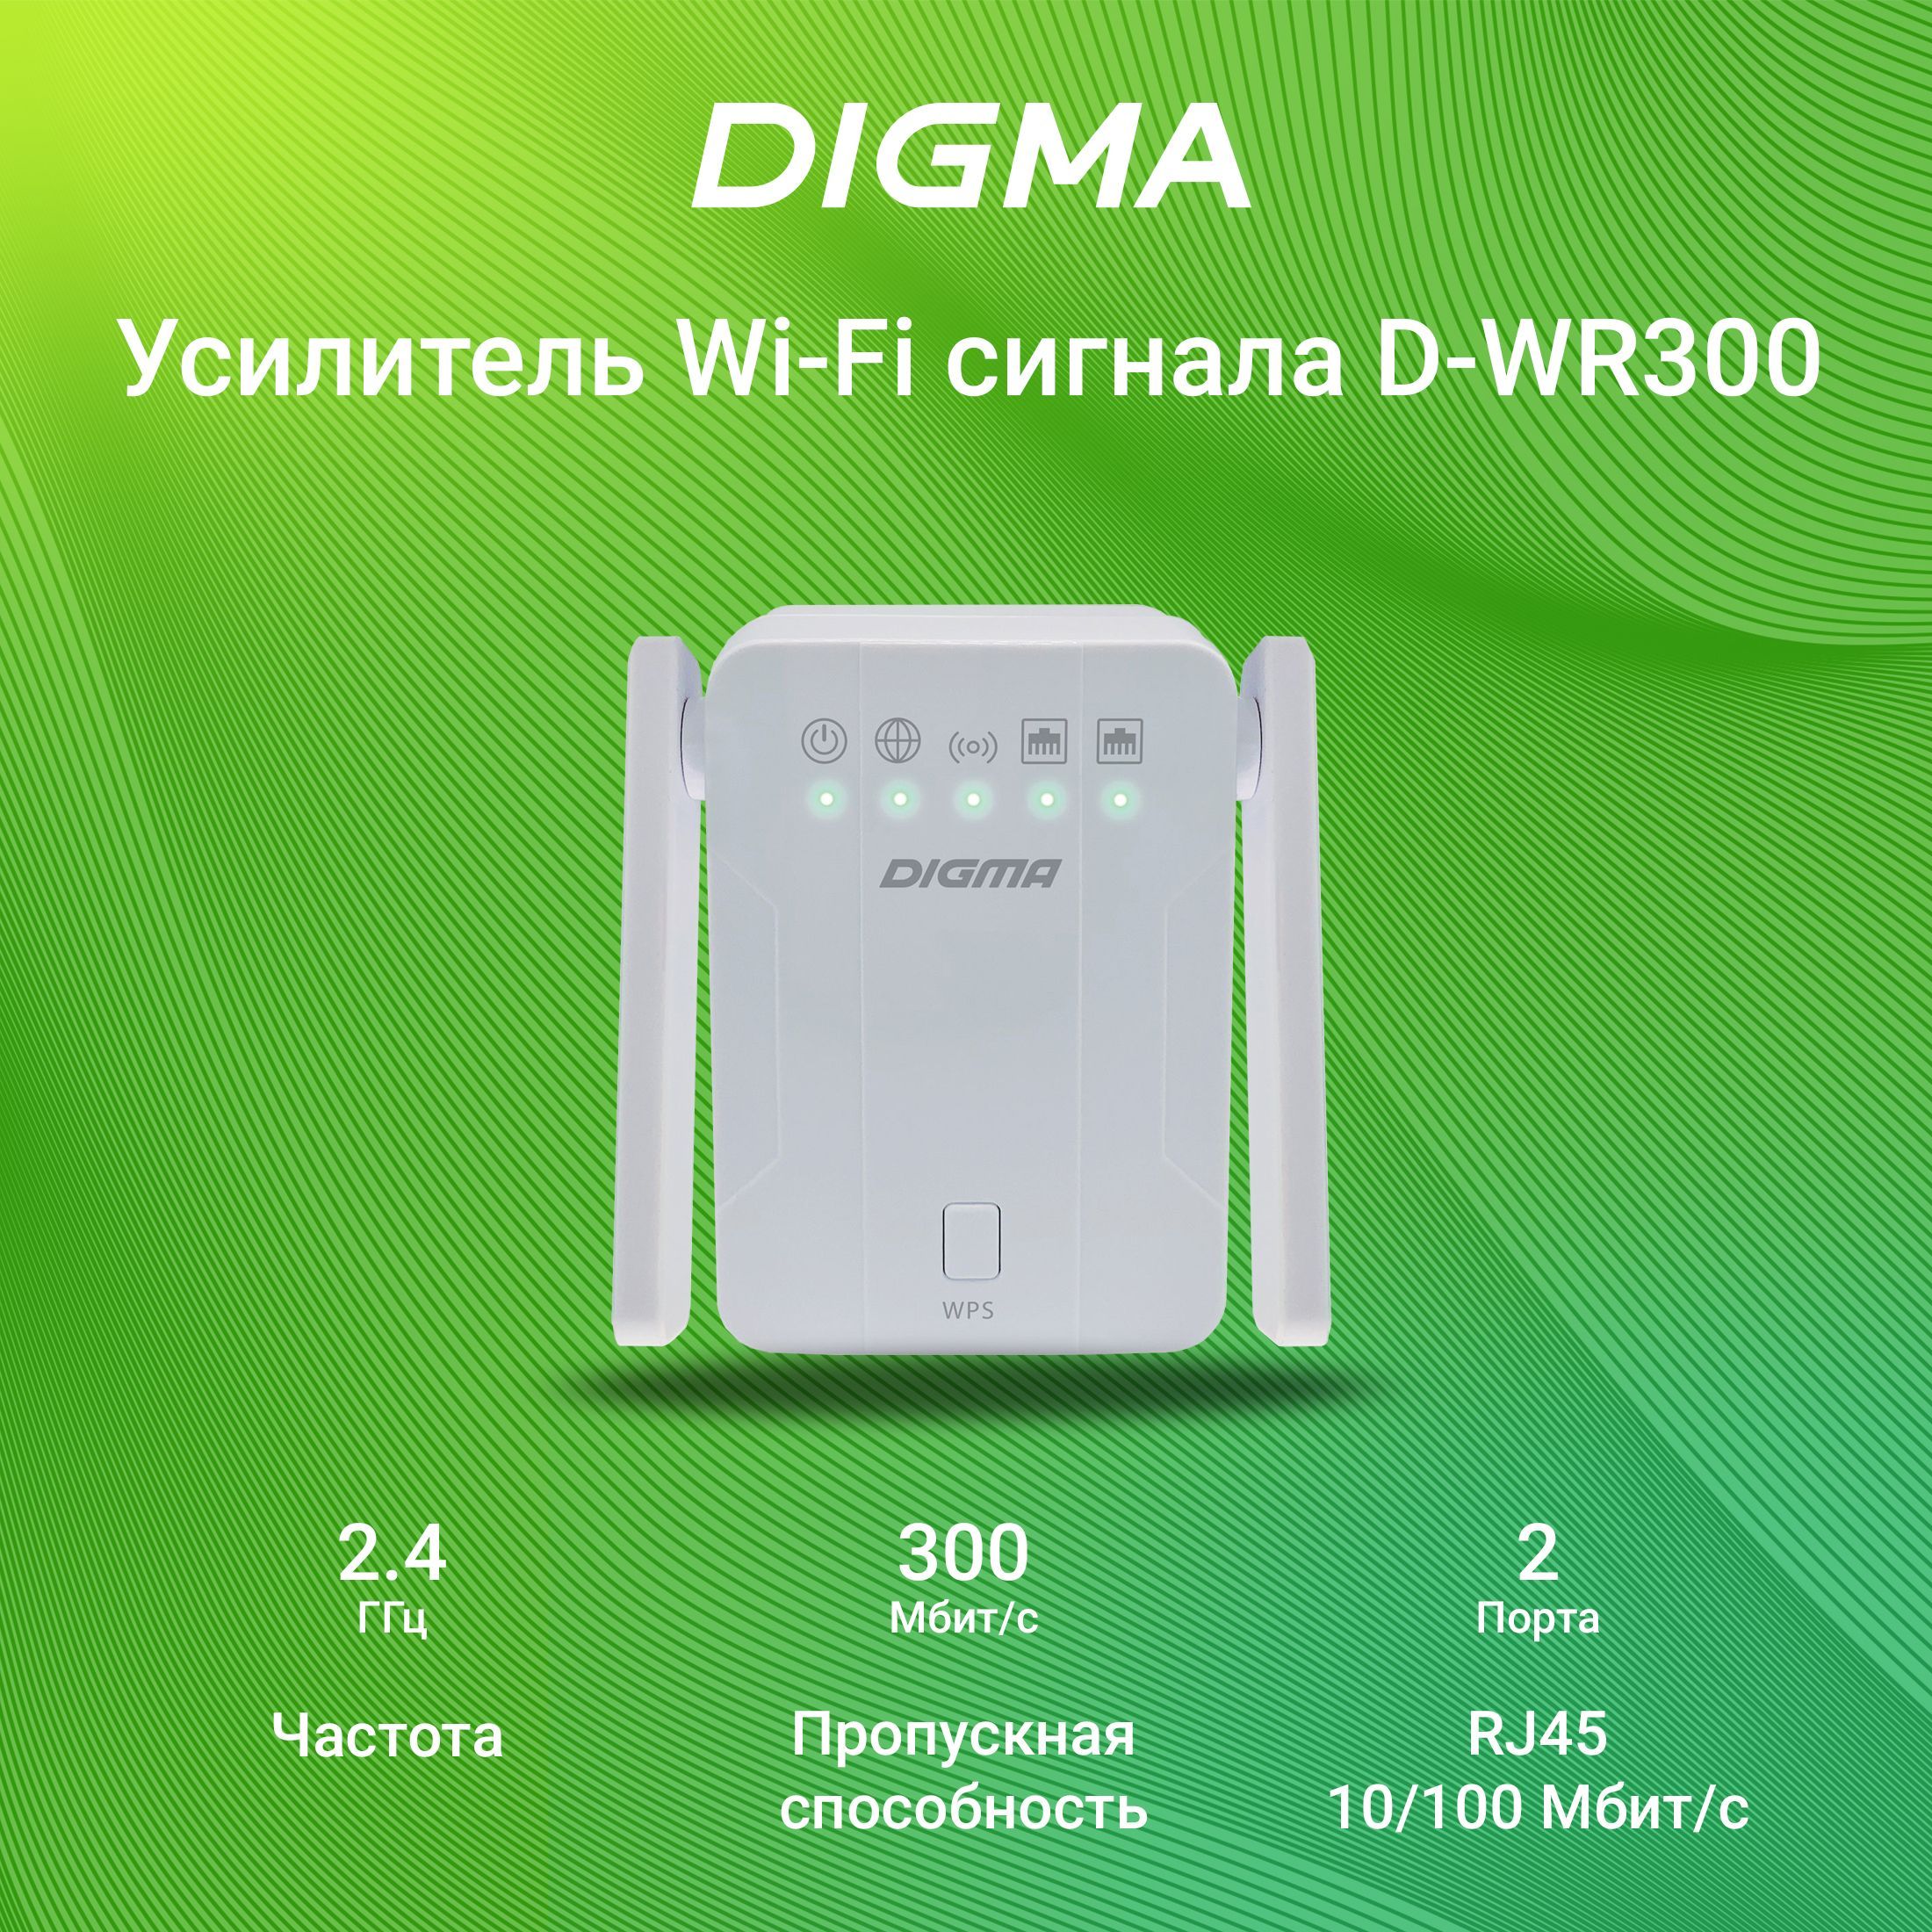 УсилительбеспроводногосигналаWi-Fi2.4ГГцDigmaD-WR300N300,репитер,300Мбит/с